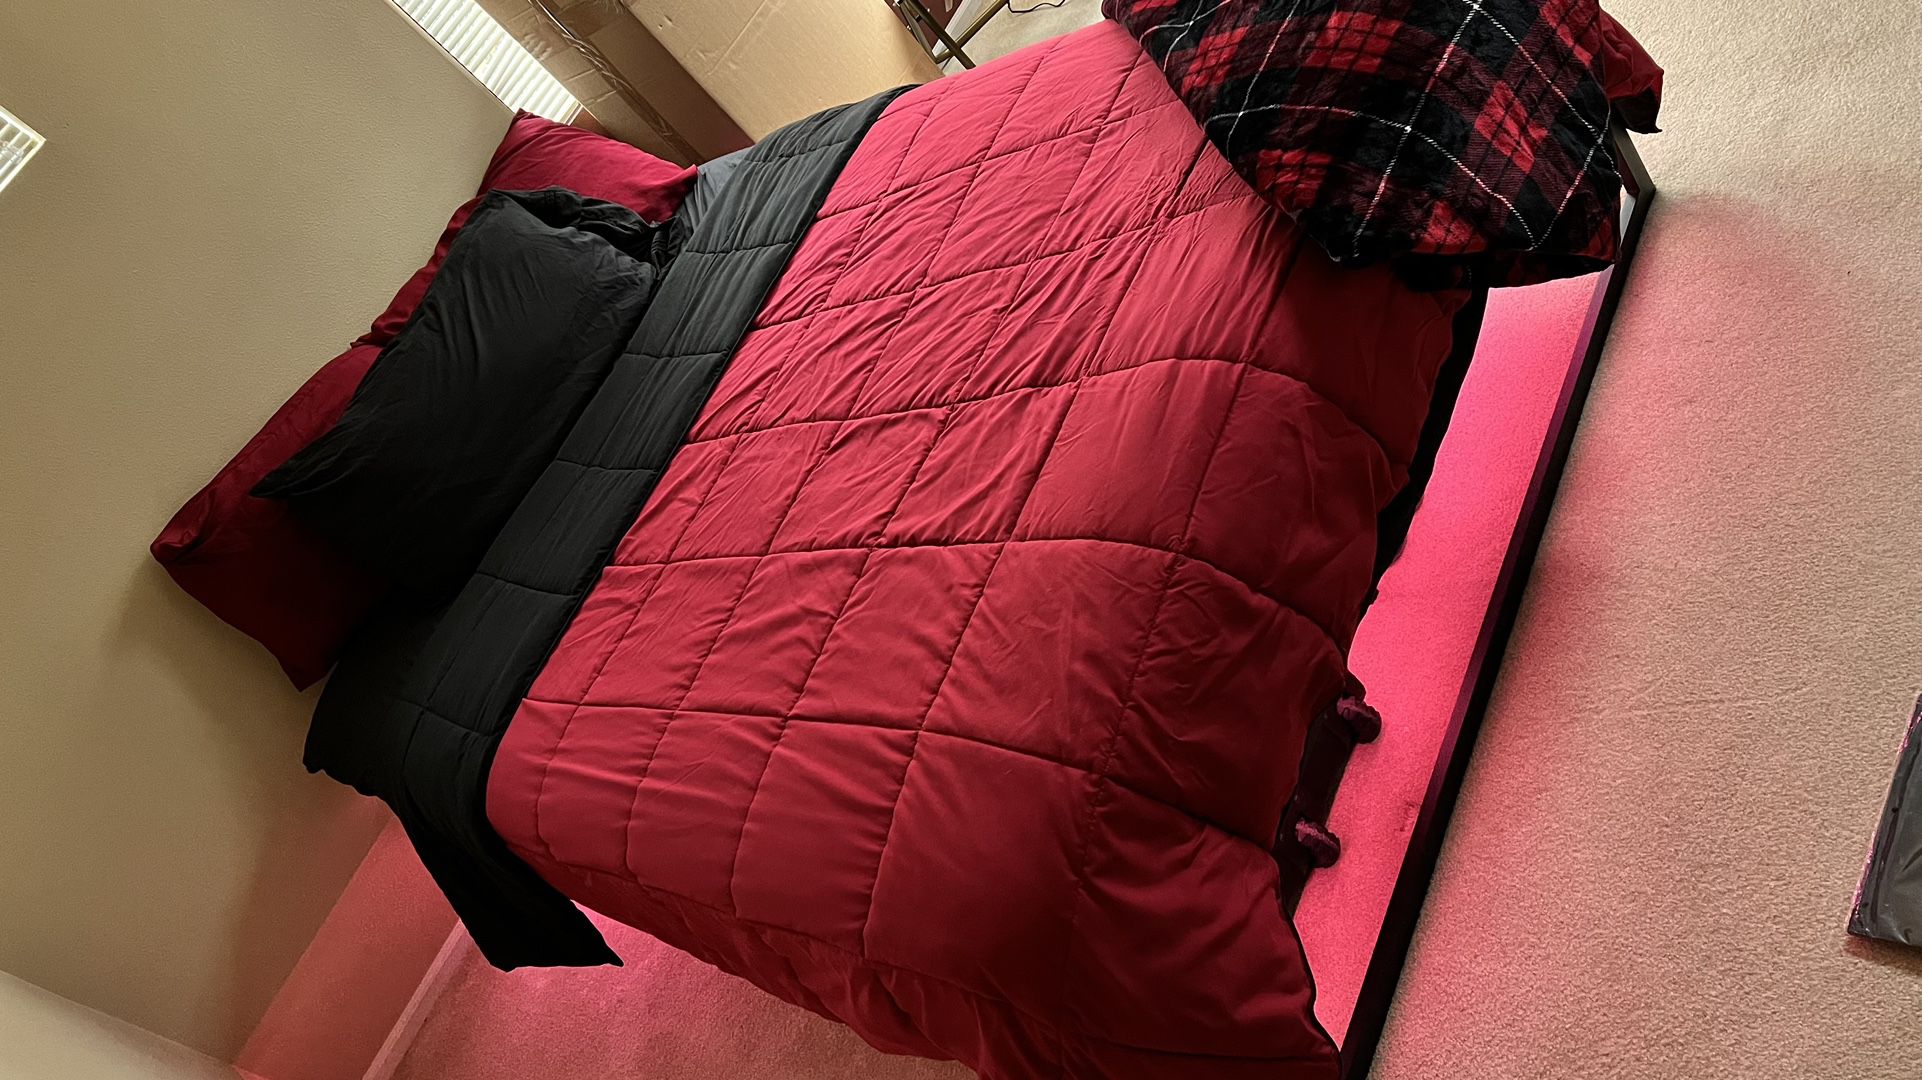 free queen size mattress in san mateo ca